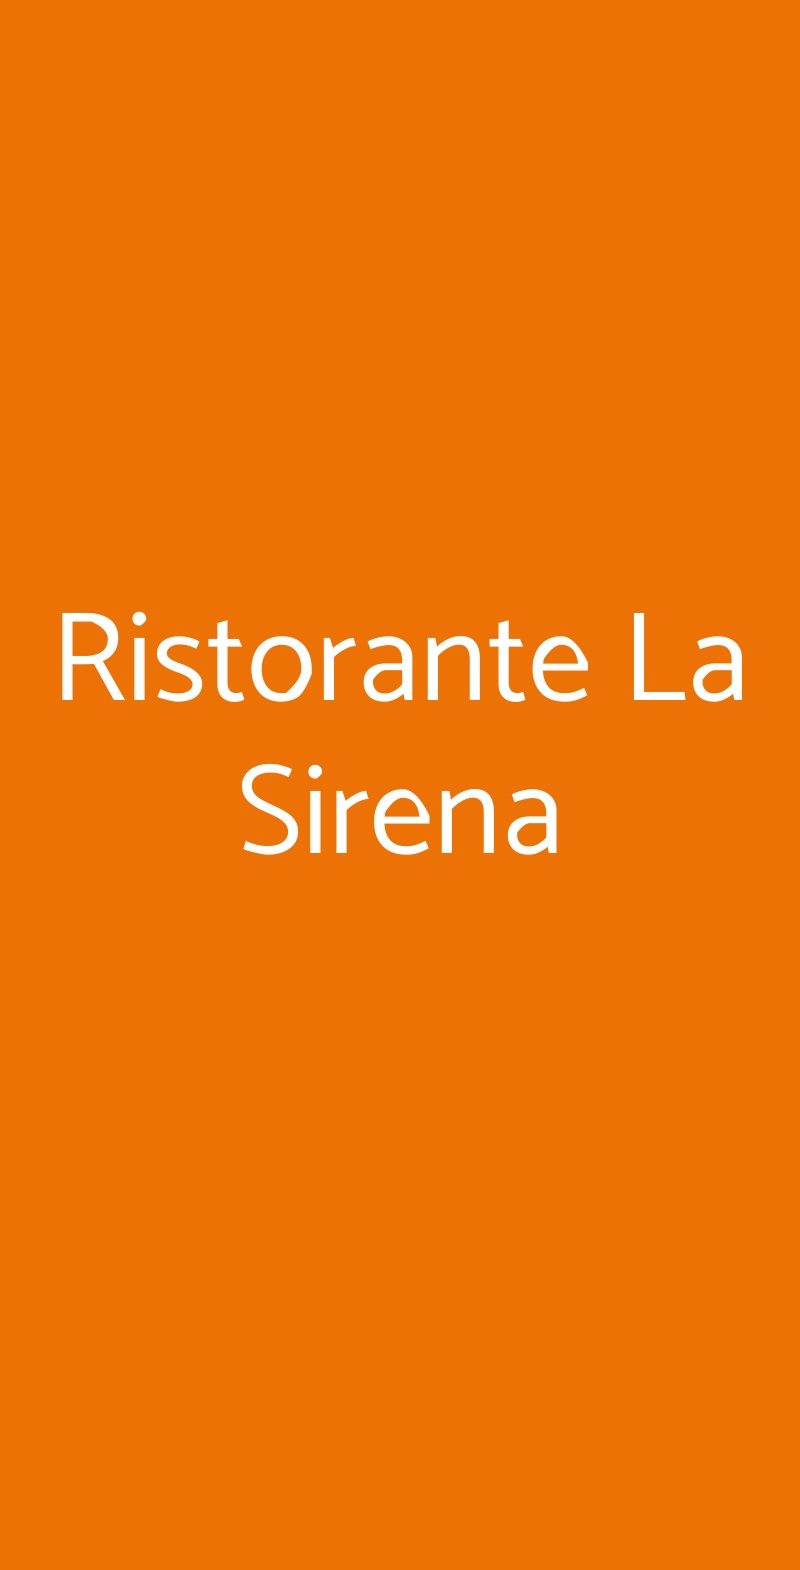 Ristorante La Sirena Sinalunga menù 1 pagina